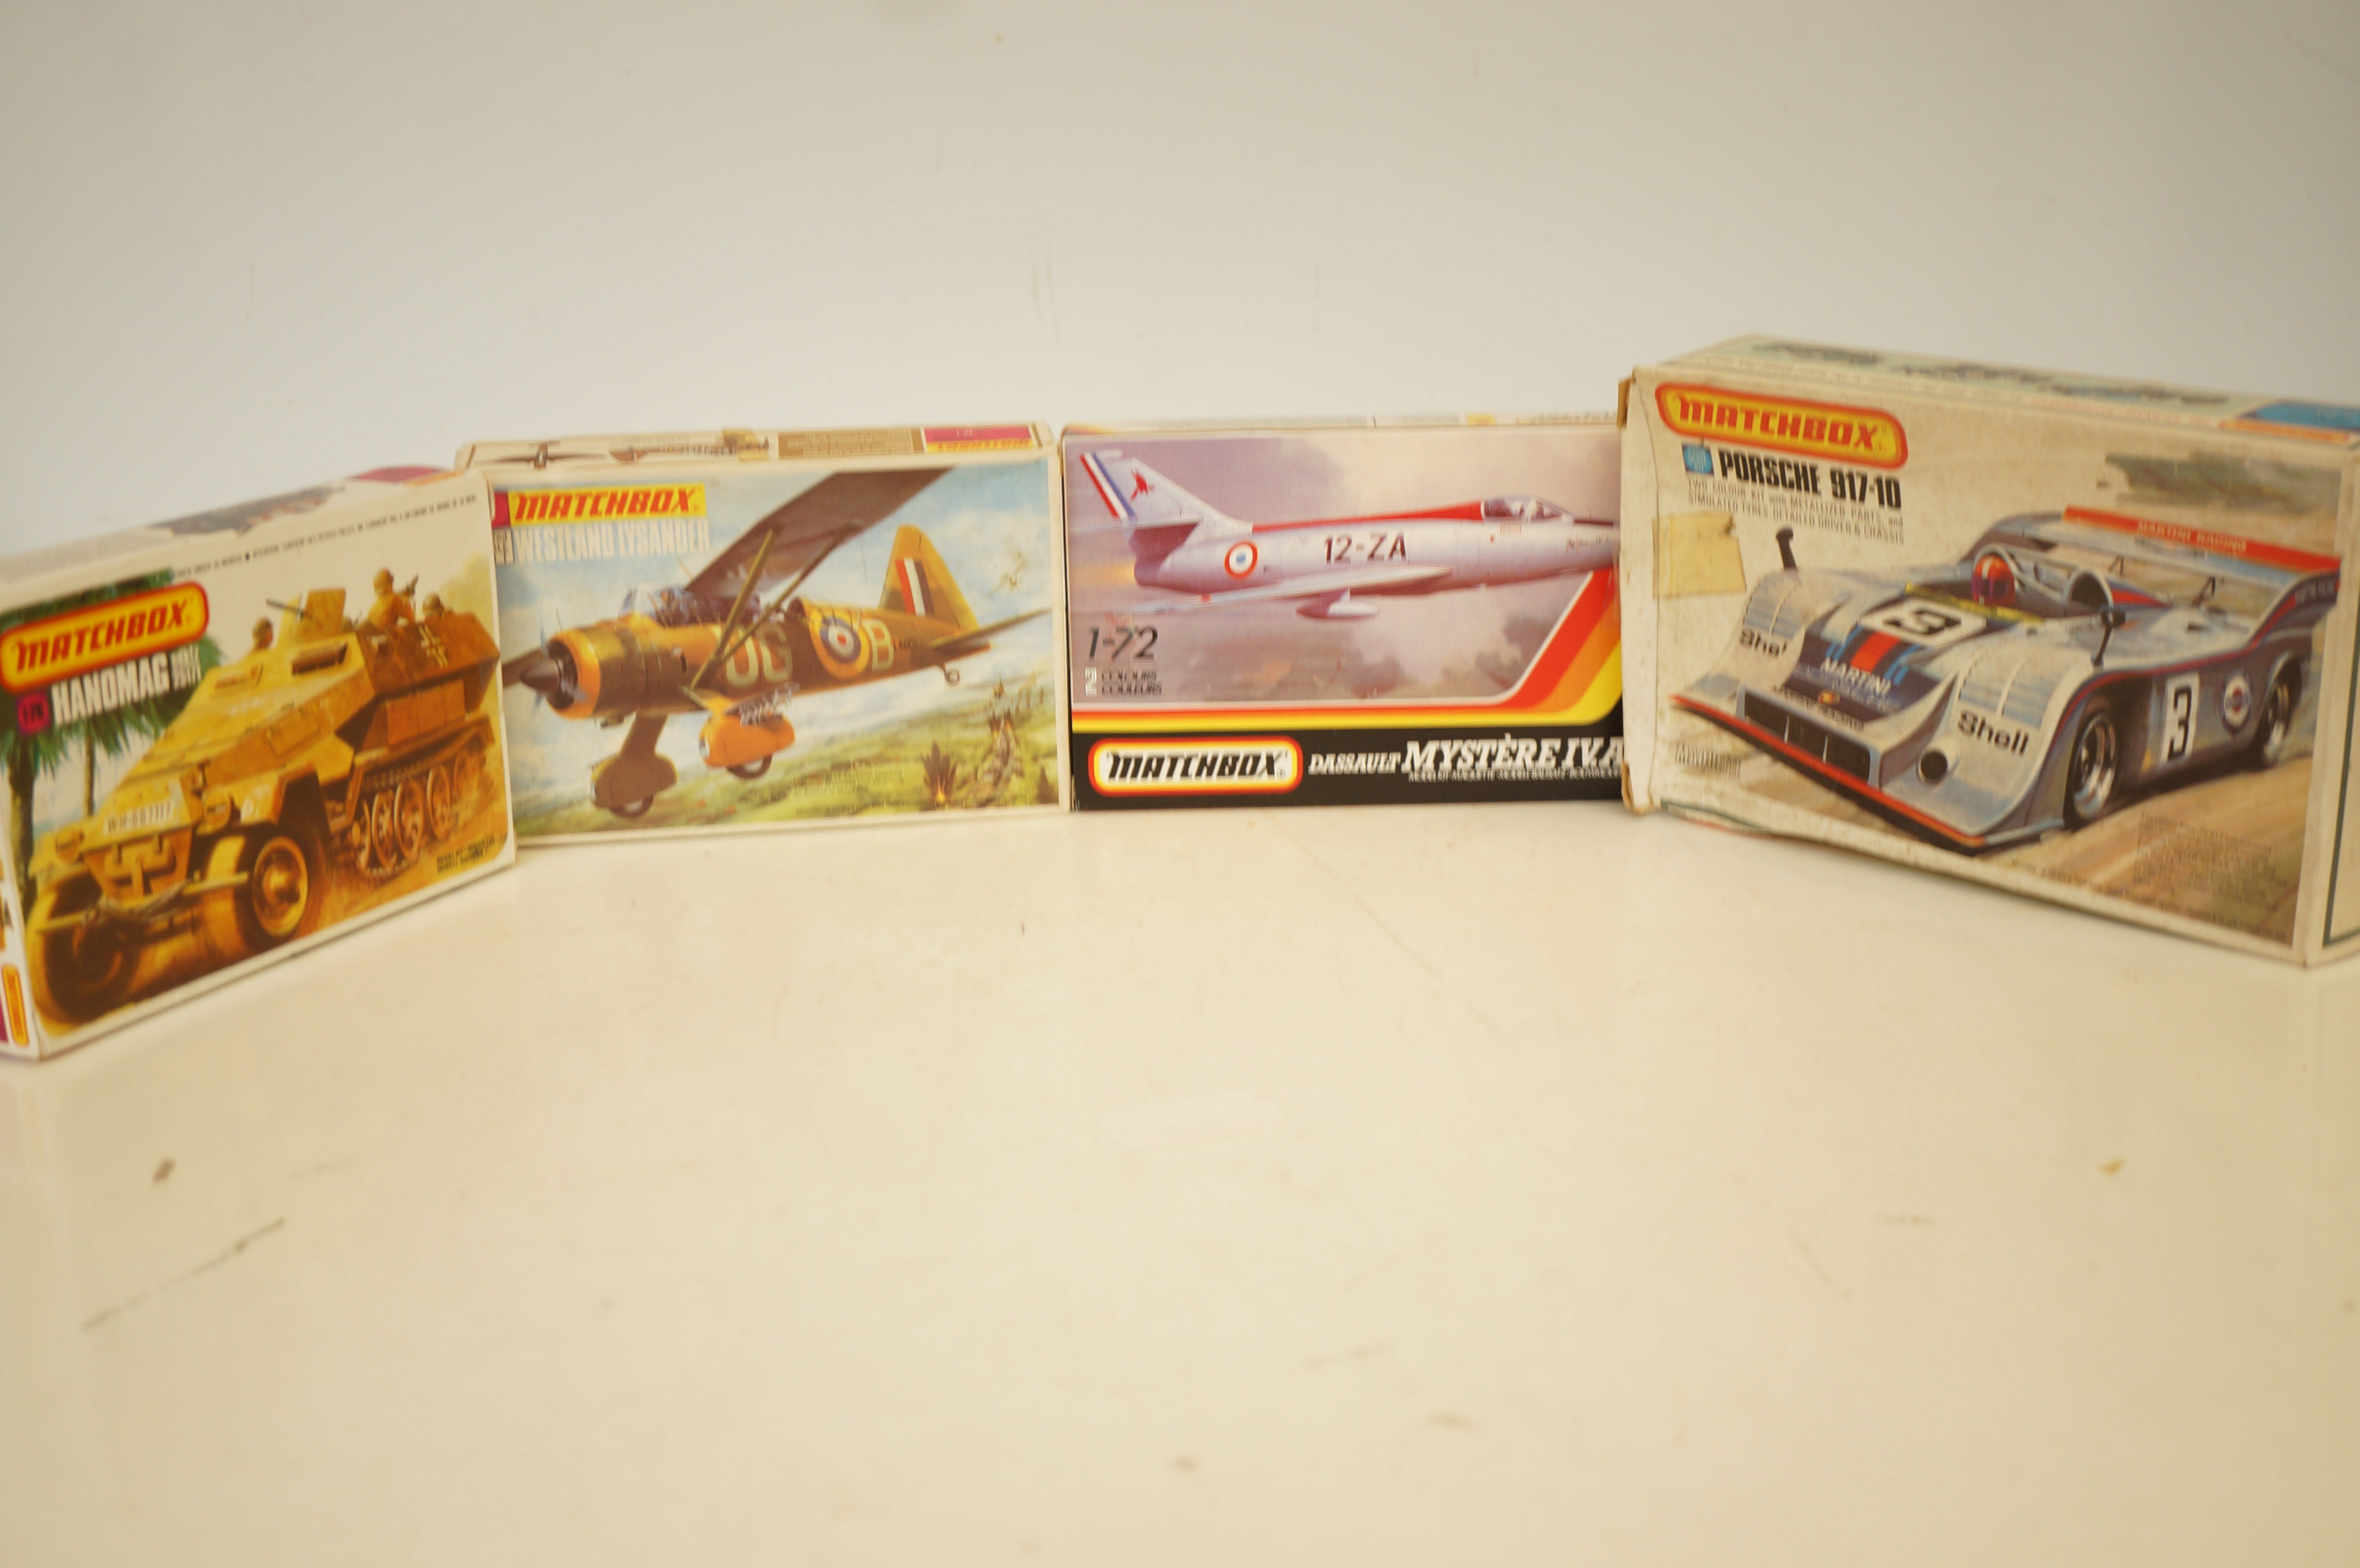 Matchbox vintage model kits, all seem to be unopen